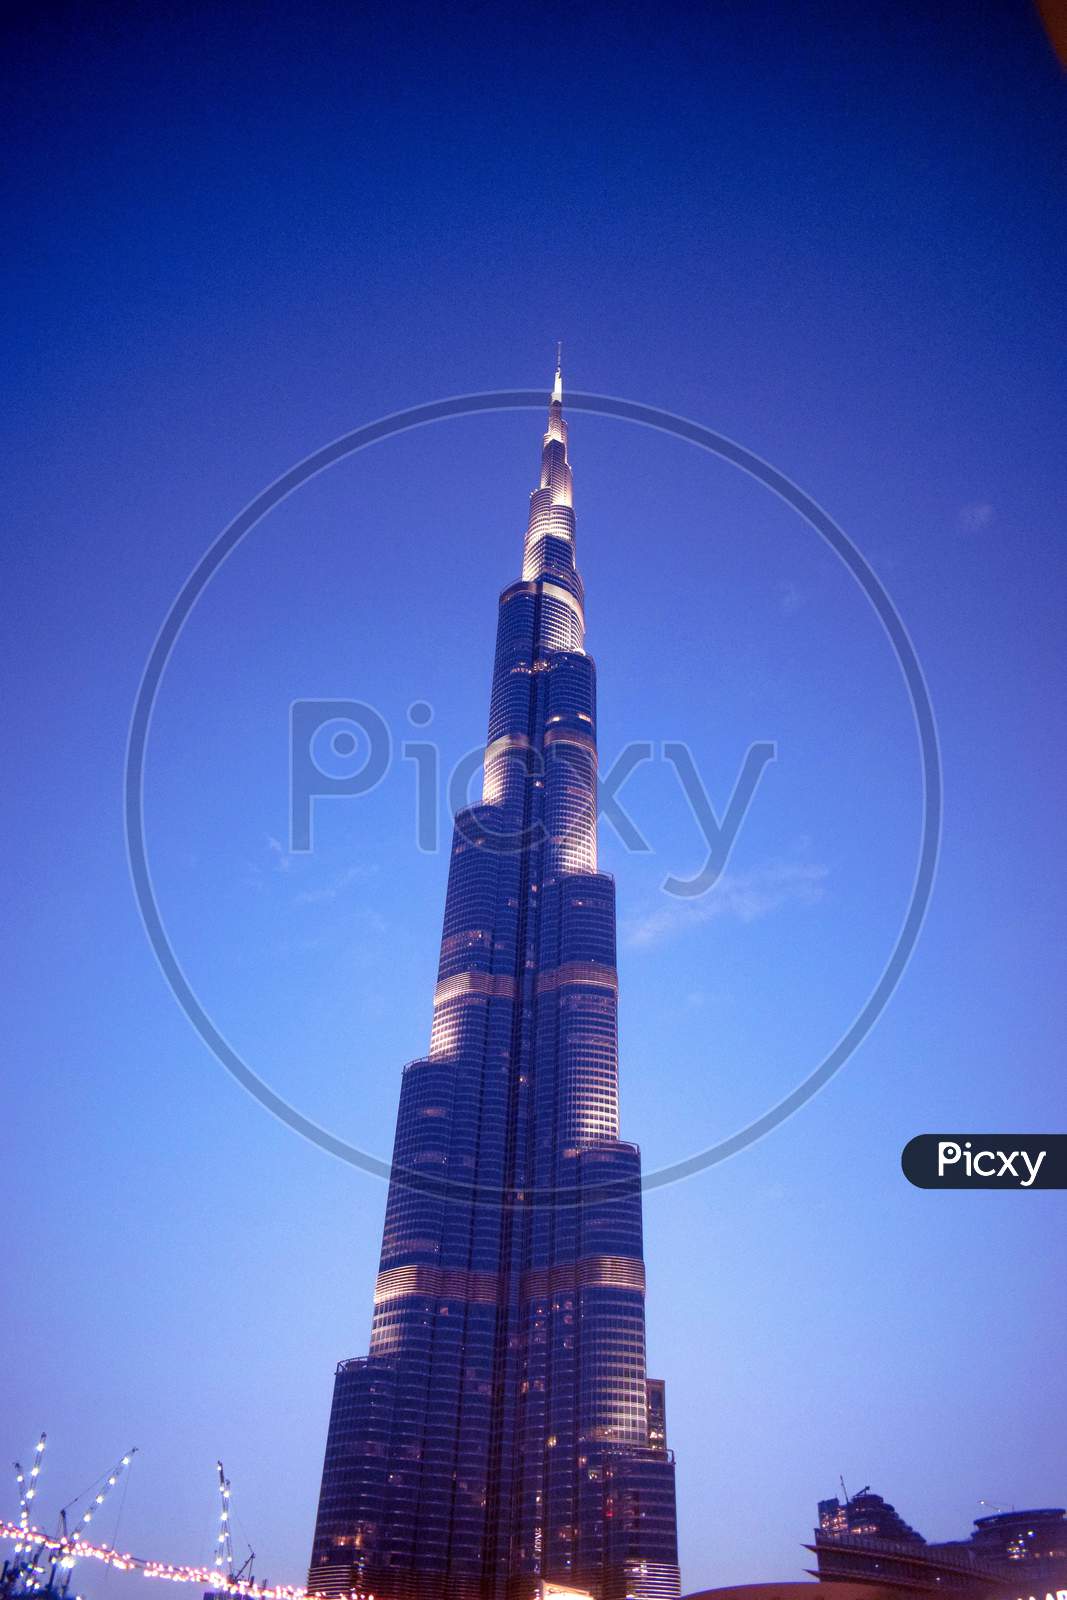 A close view of World's tallest tower 'Burj khalifa'